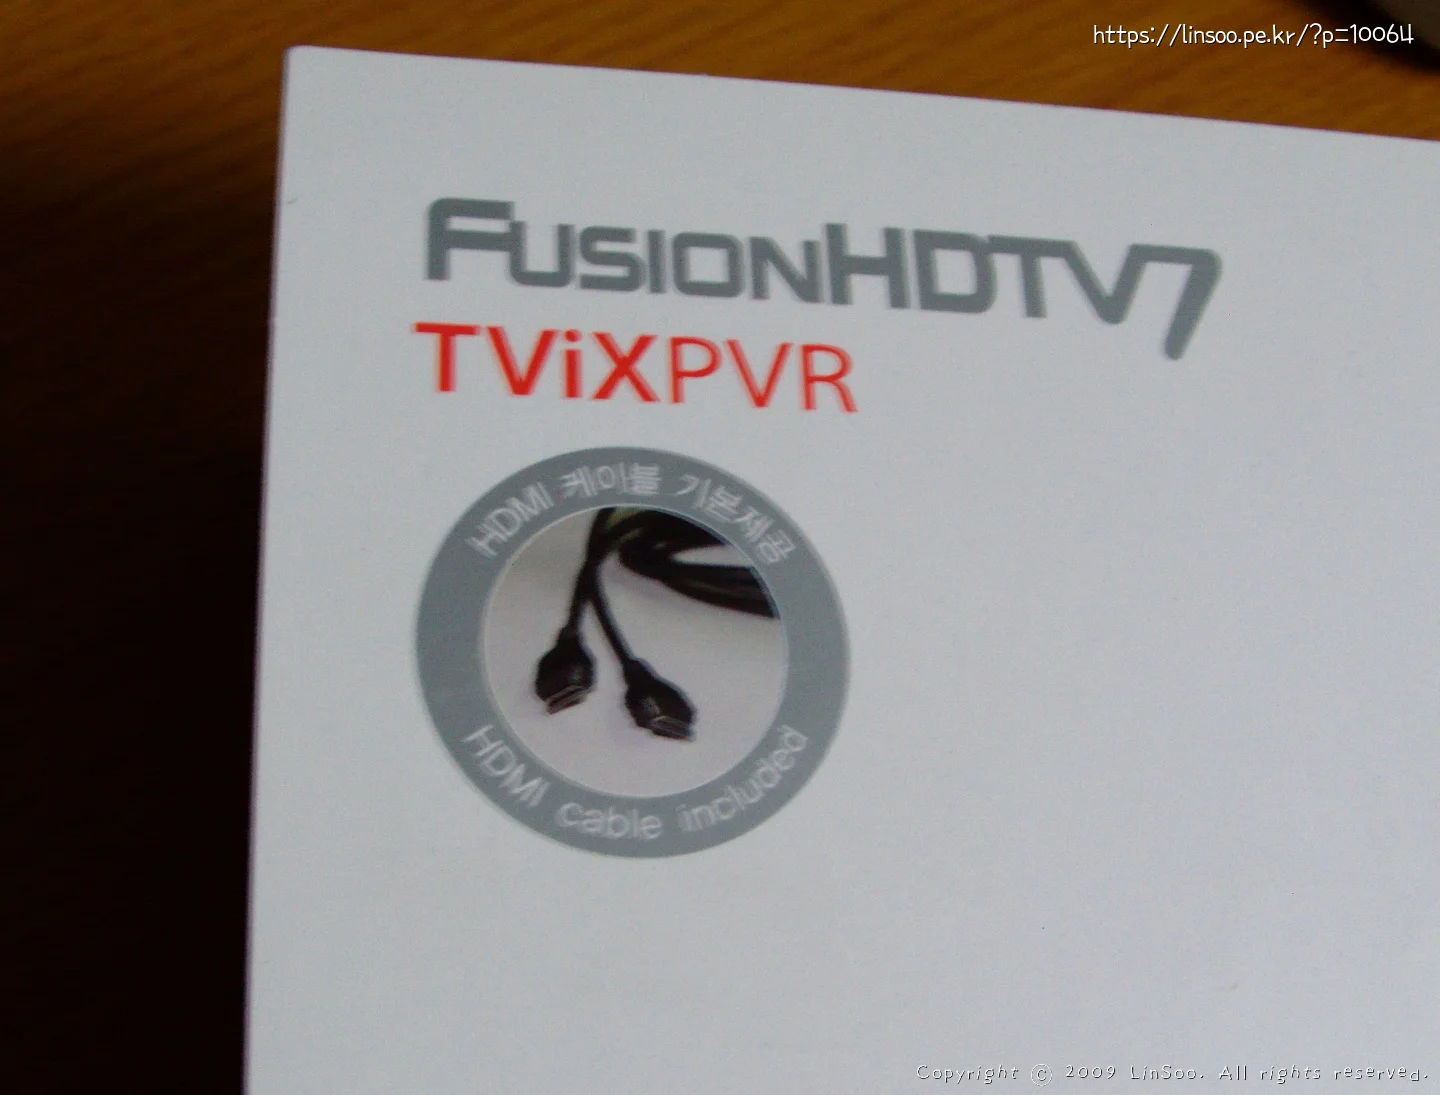 FusionHDTV7 TViX PVR